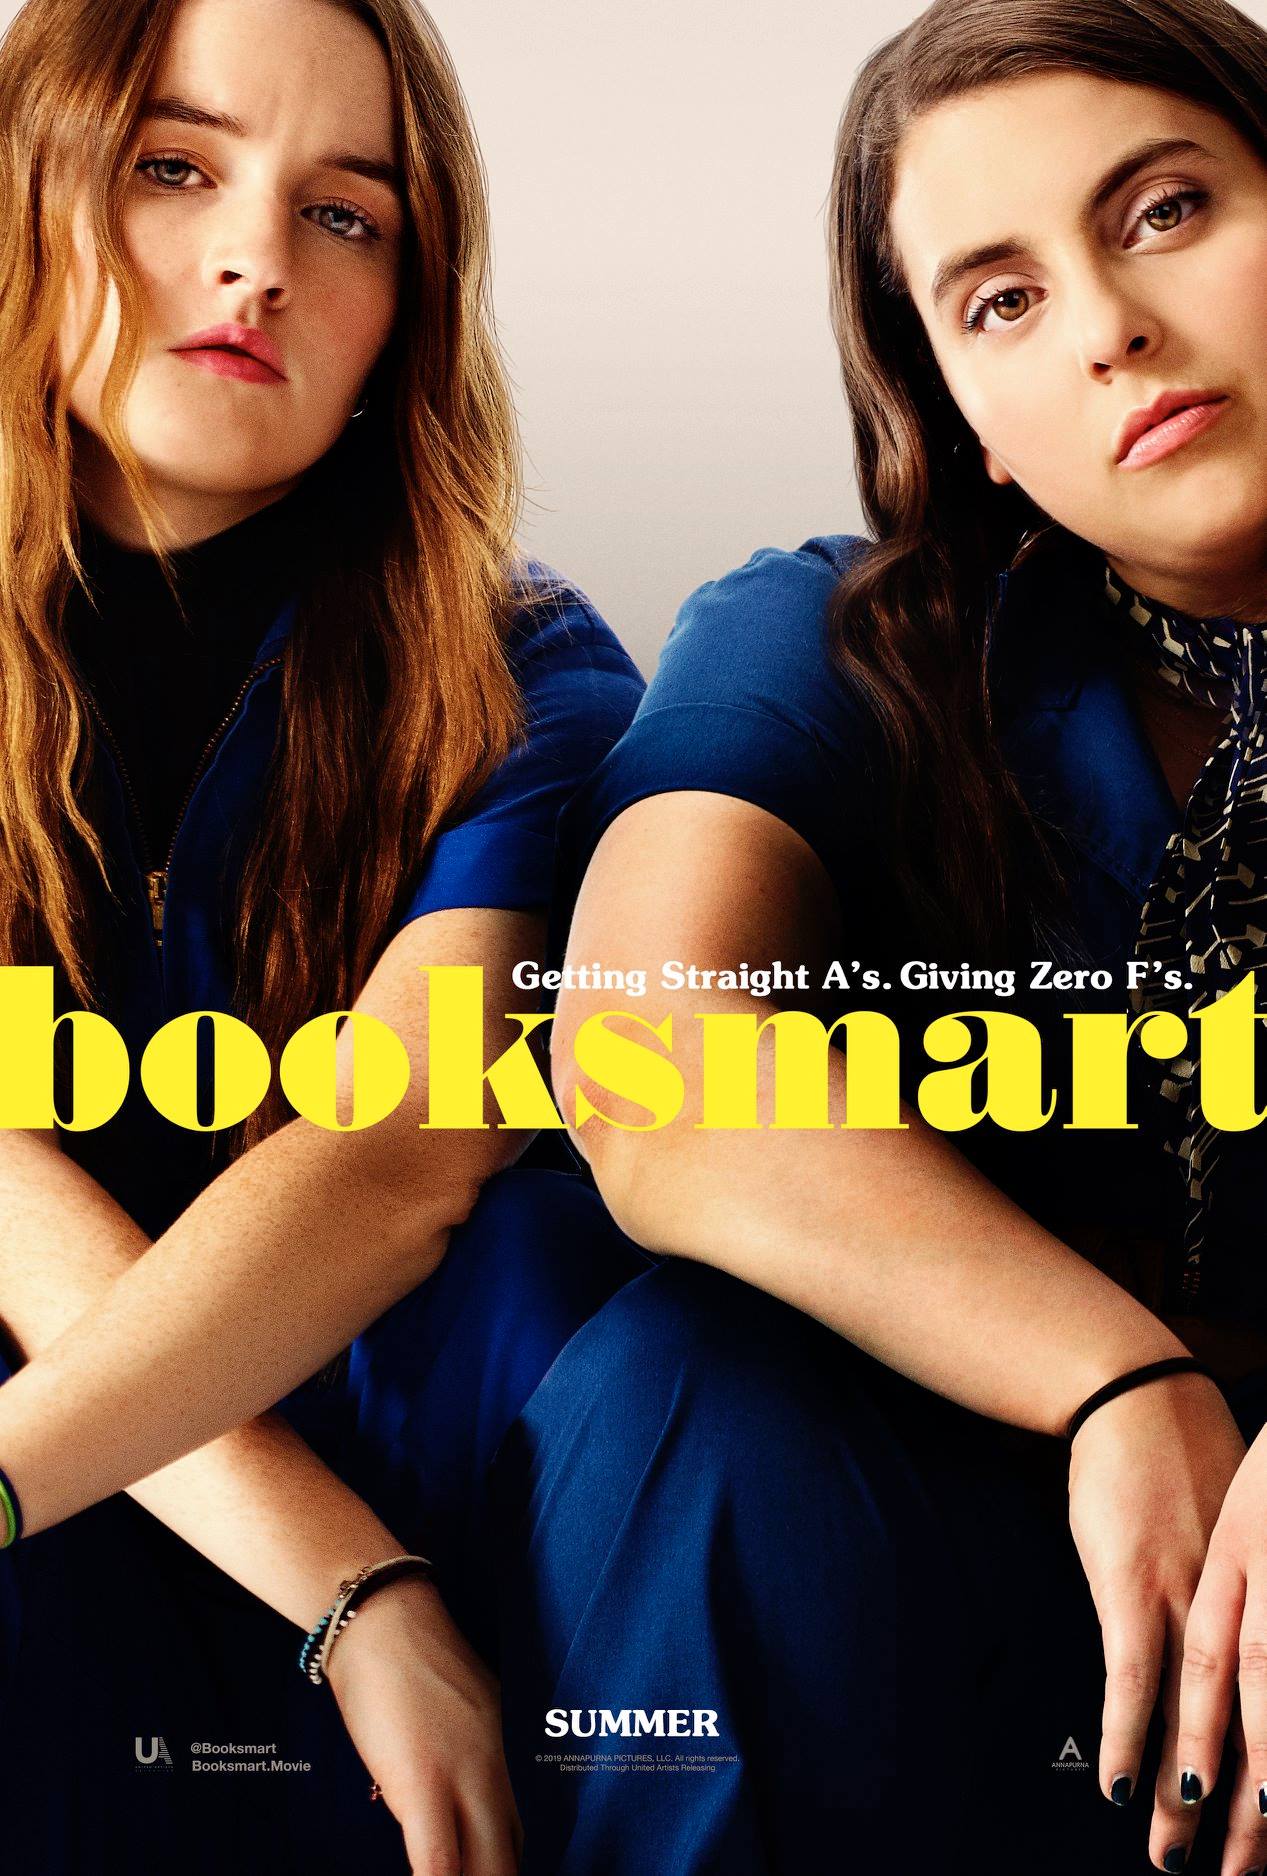 booksmart 2019 dvd cover